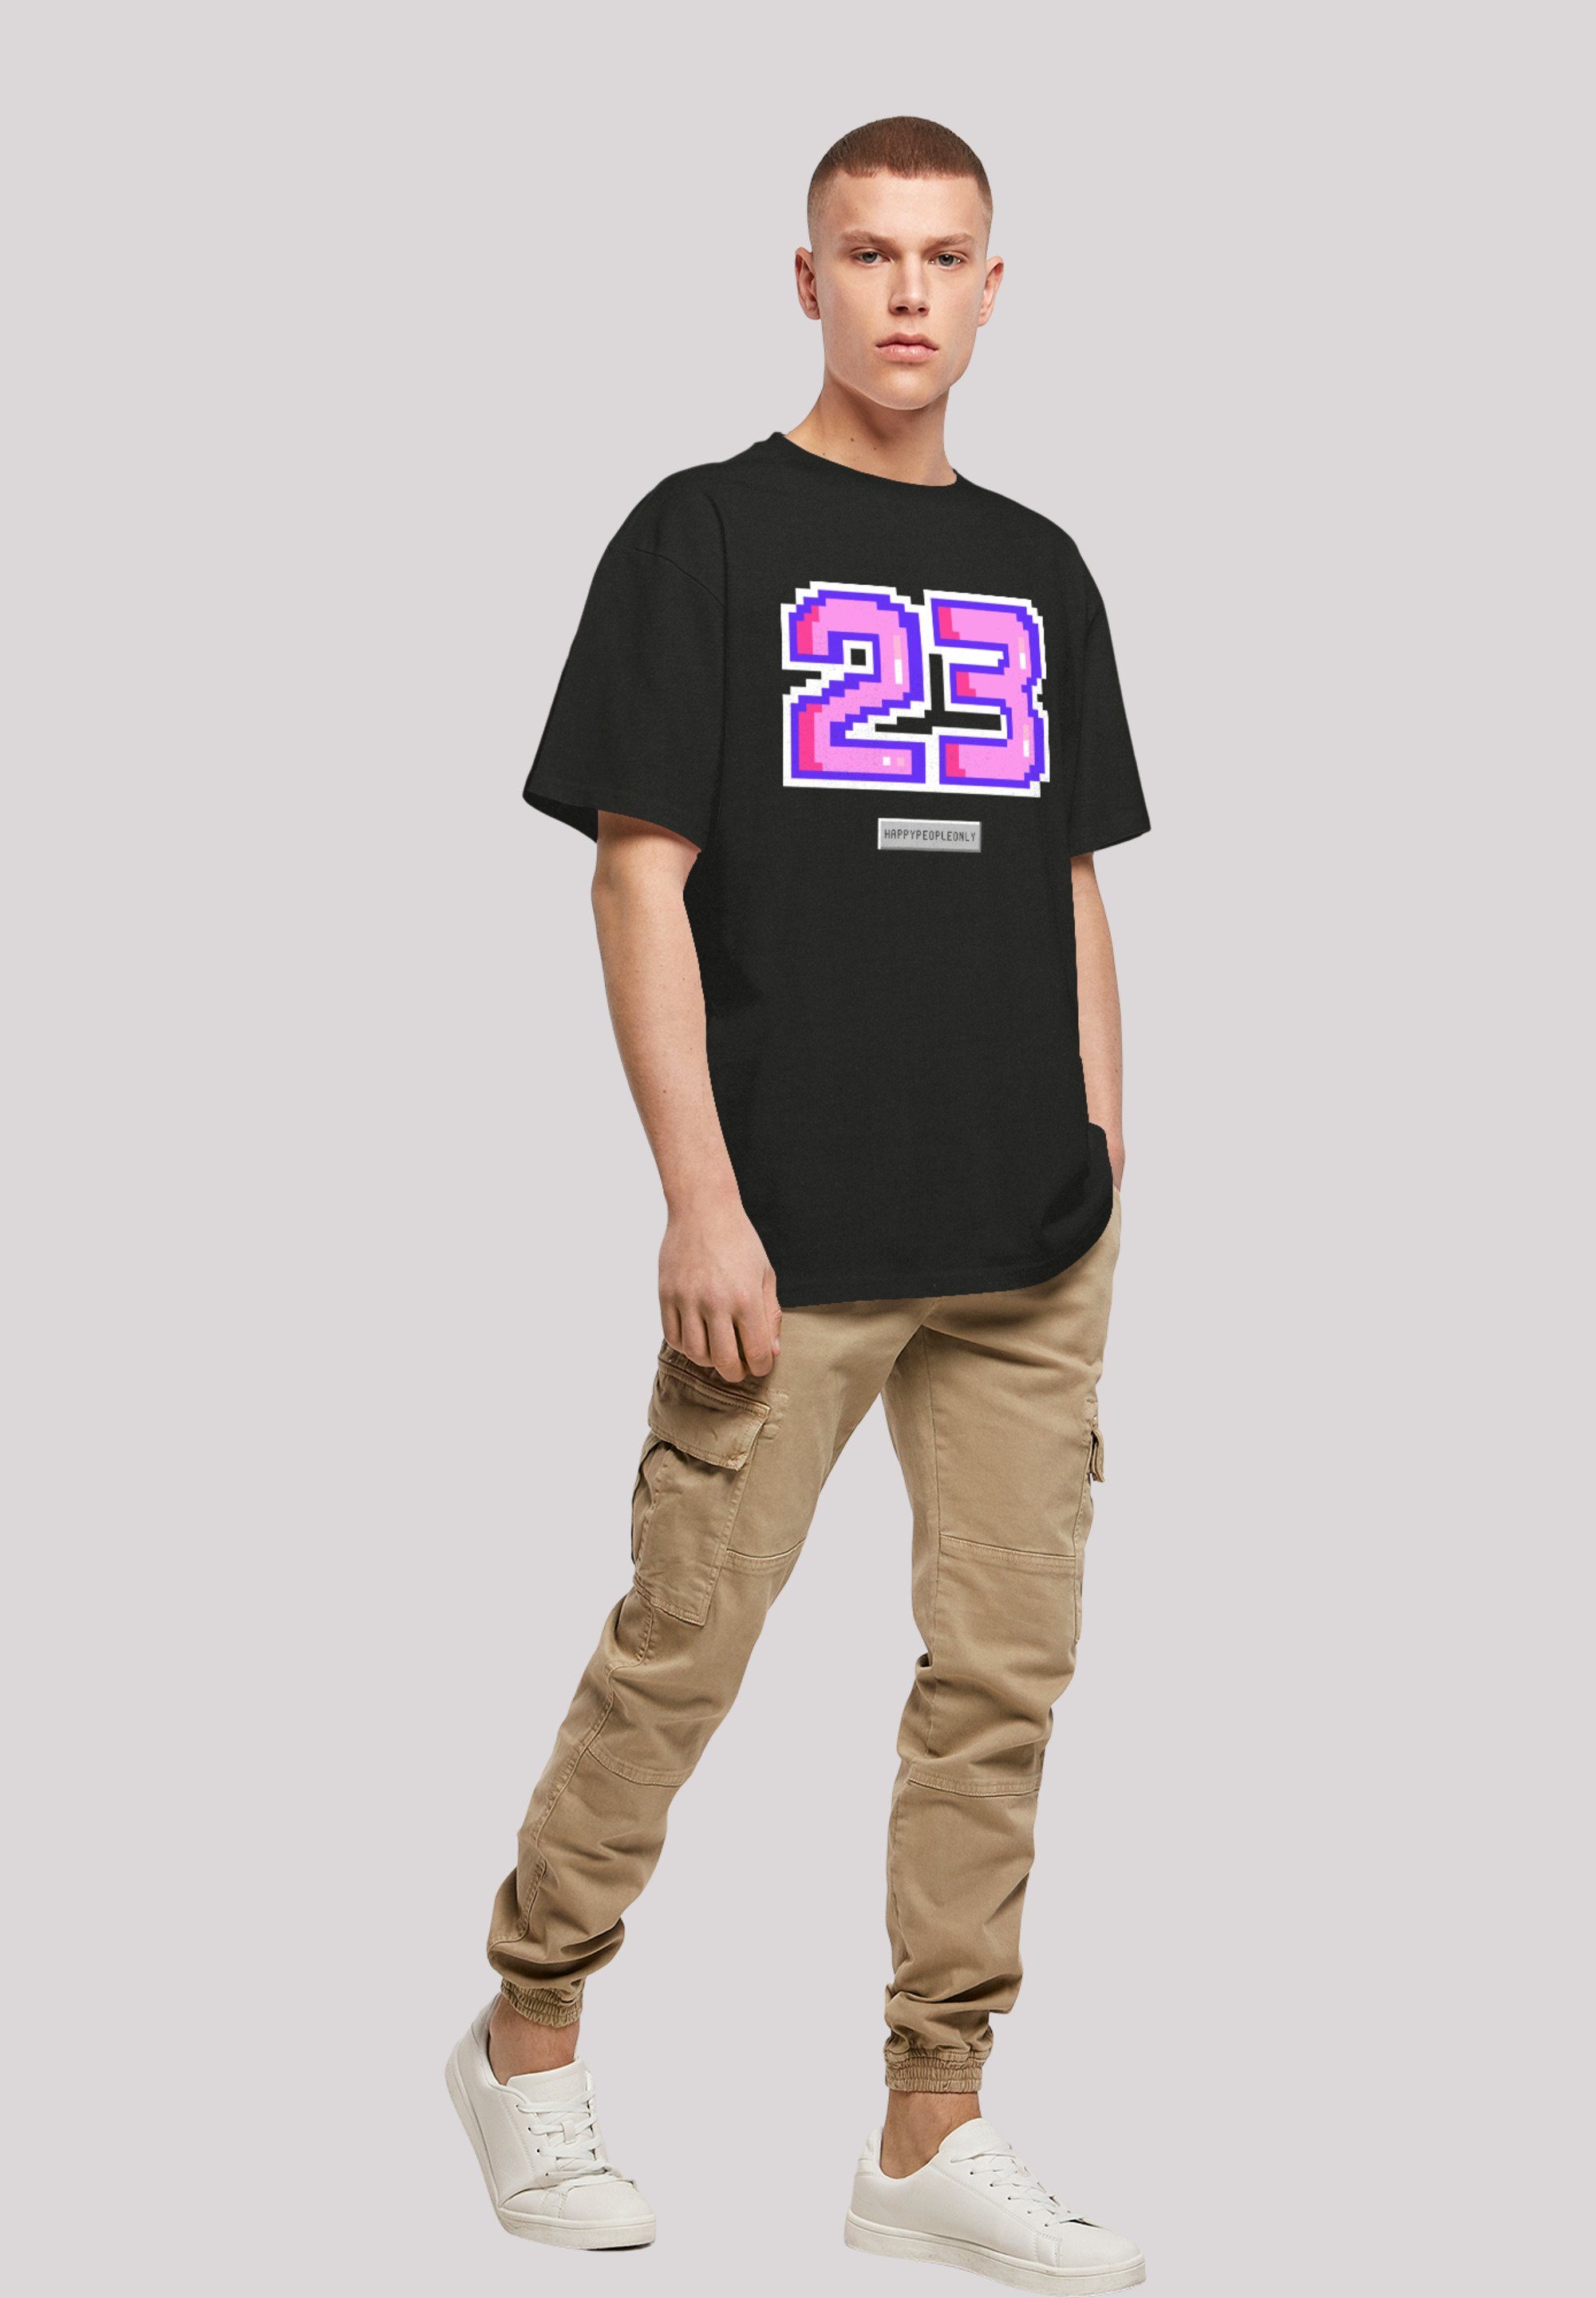 23 F4NT4STIC T-Shirt schwarz pink Print Pixel